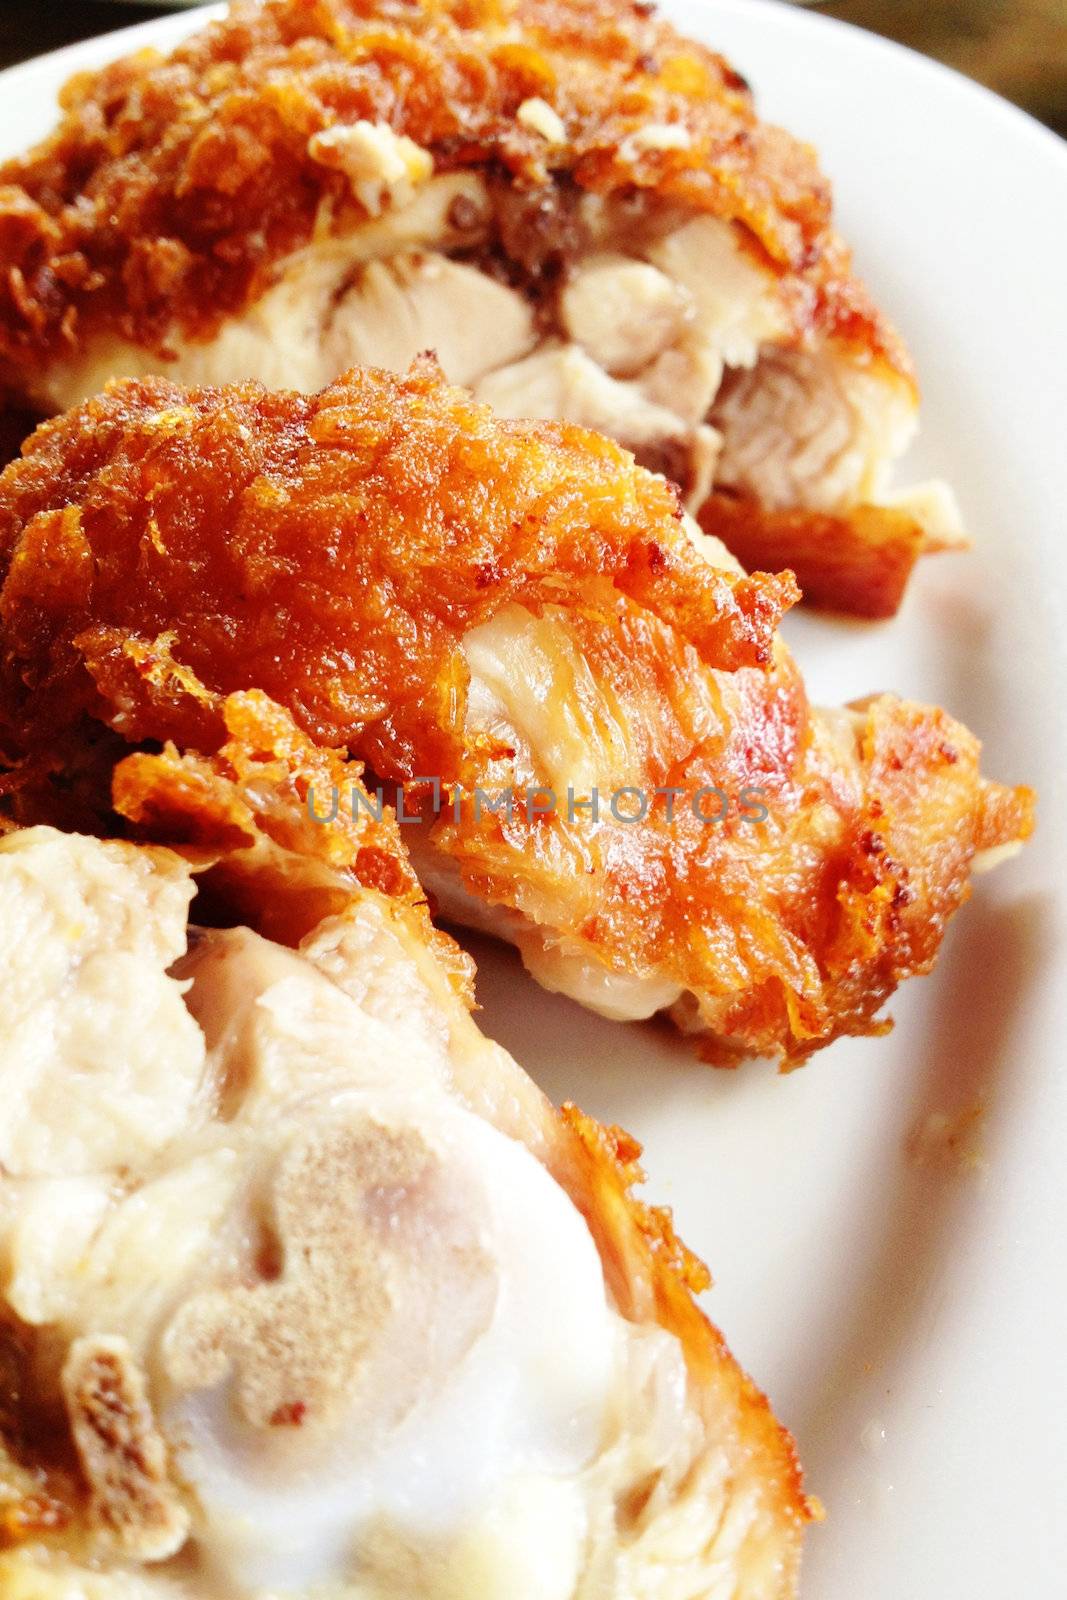 fried chicken by ponsulak